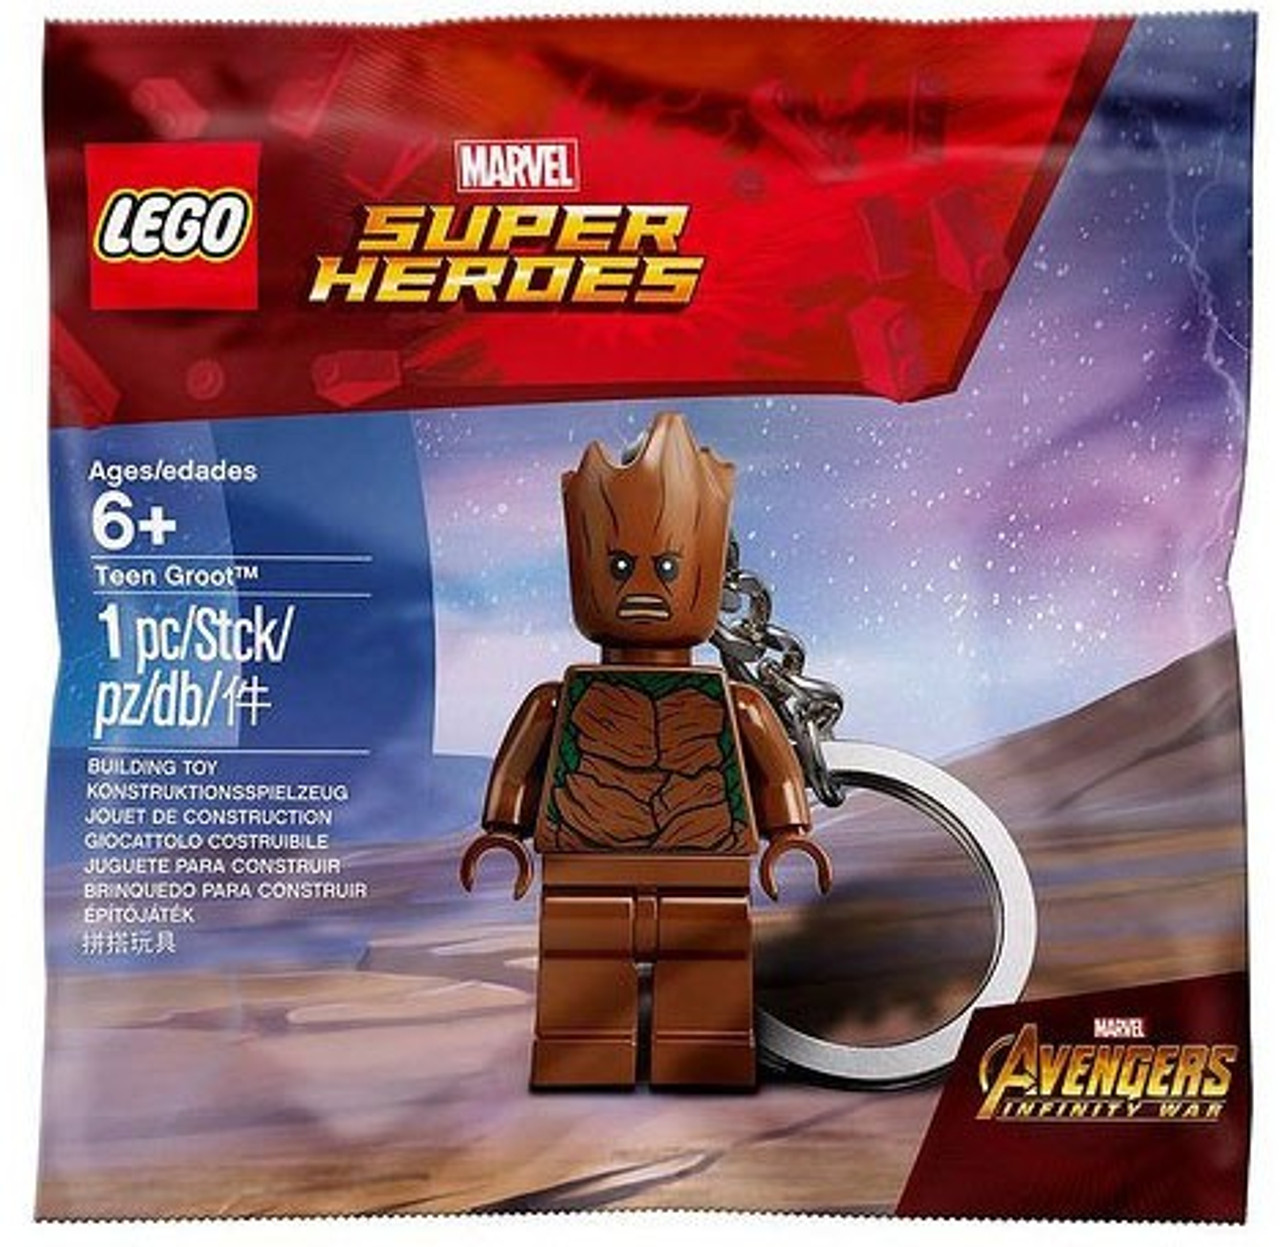 marvel super heroes avengers 3 infinity war action figure lego compatible set